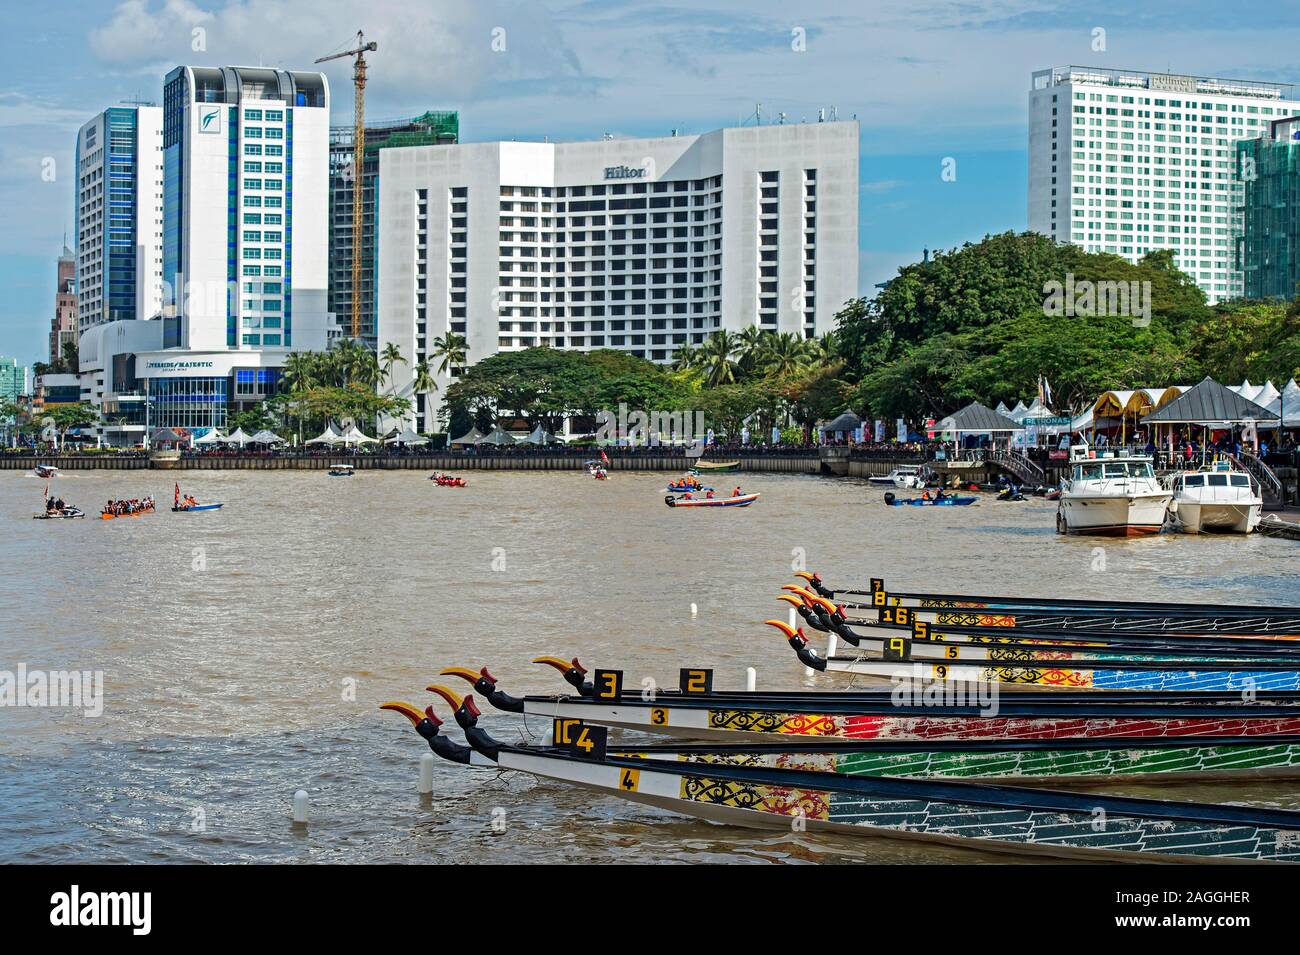 Kuching Waterfront at Sarawak river with traditional boats and Hotel buildings, Kuching, Sarawak, Borneo, Malaysia Stock Photo